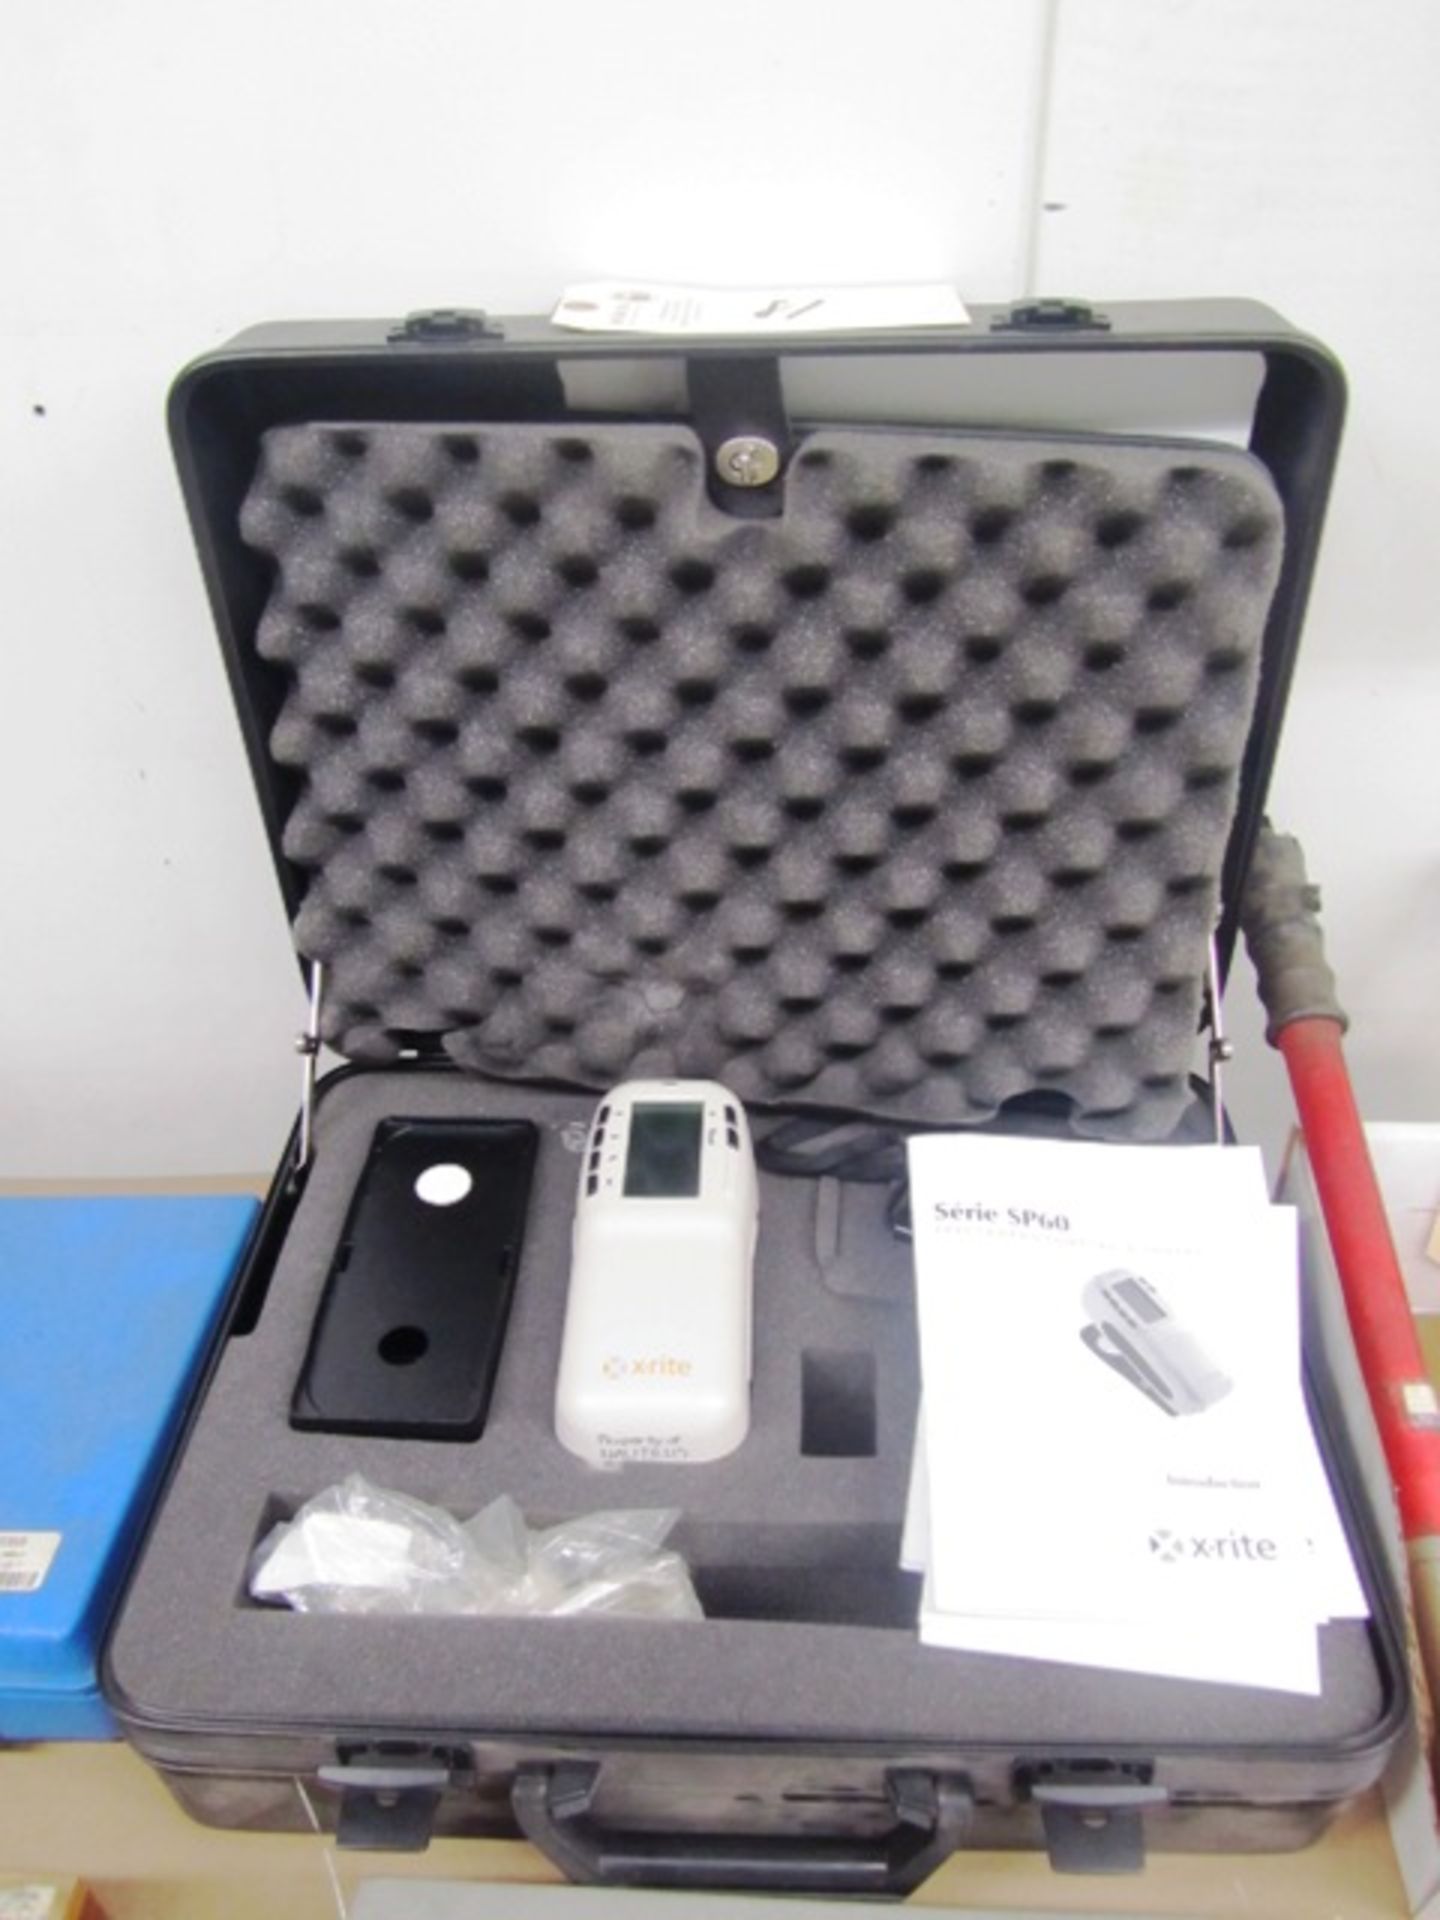 X-Rite SP60 Series Digital Spectrophotometer